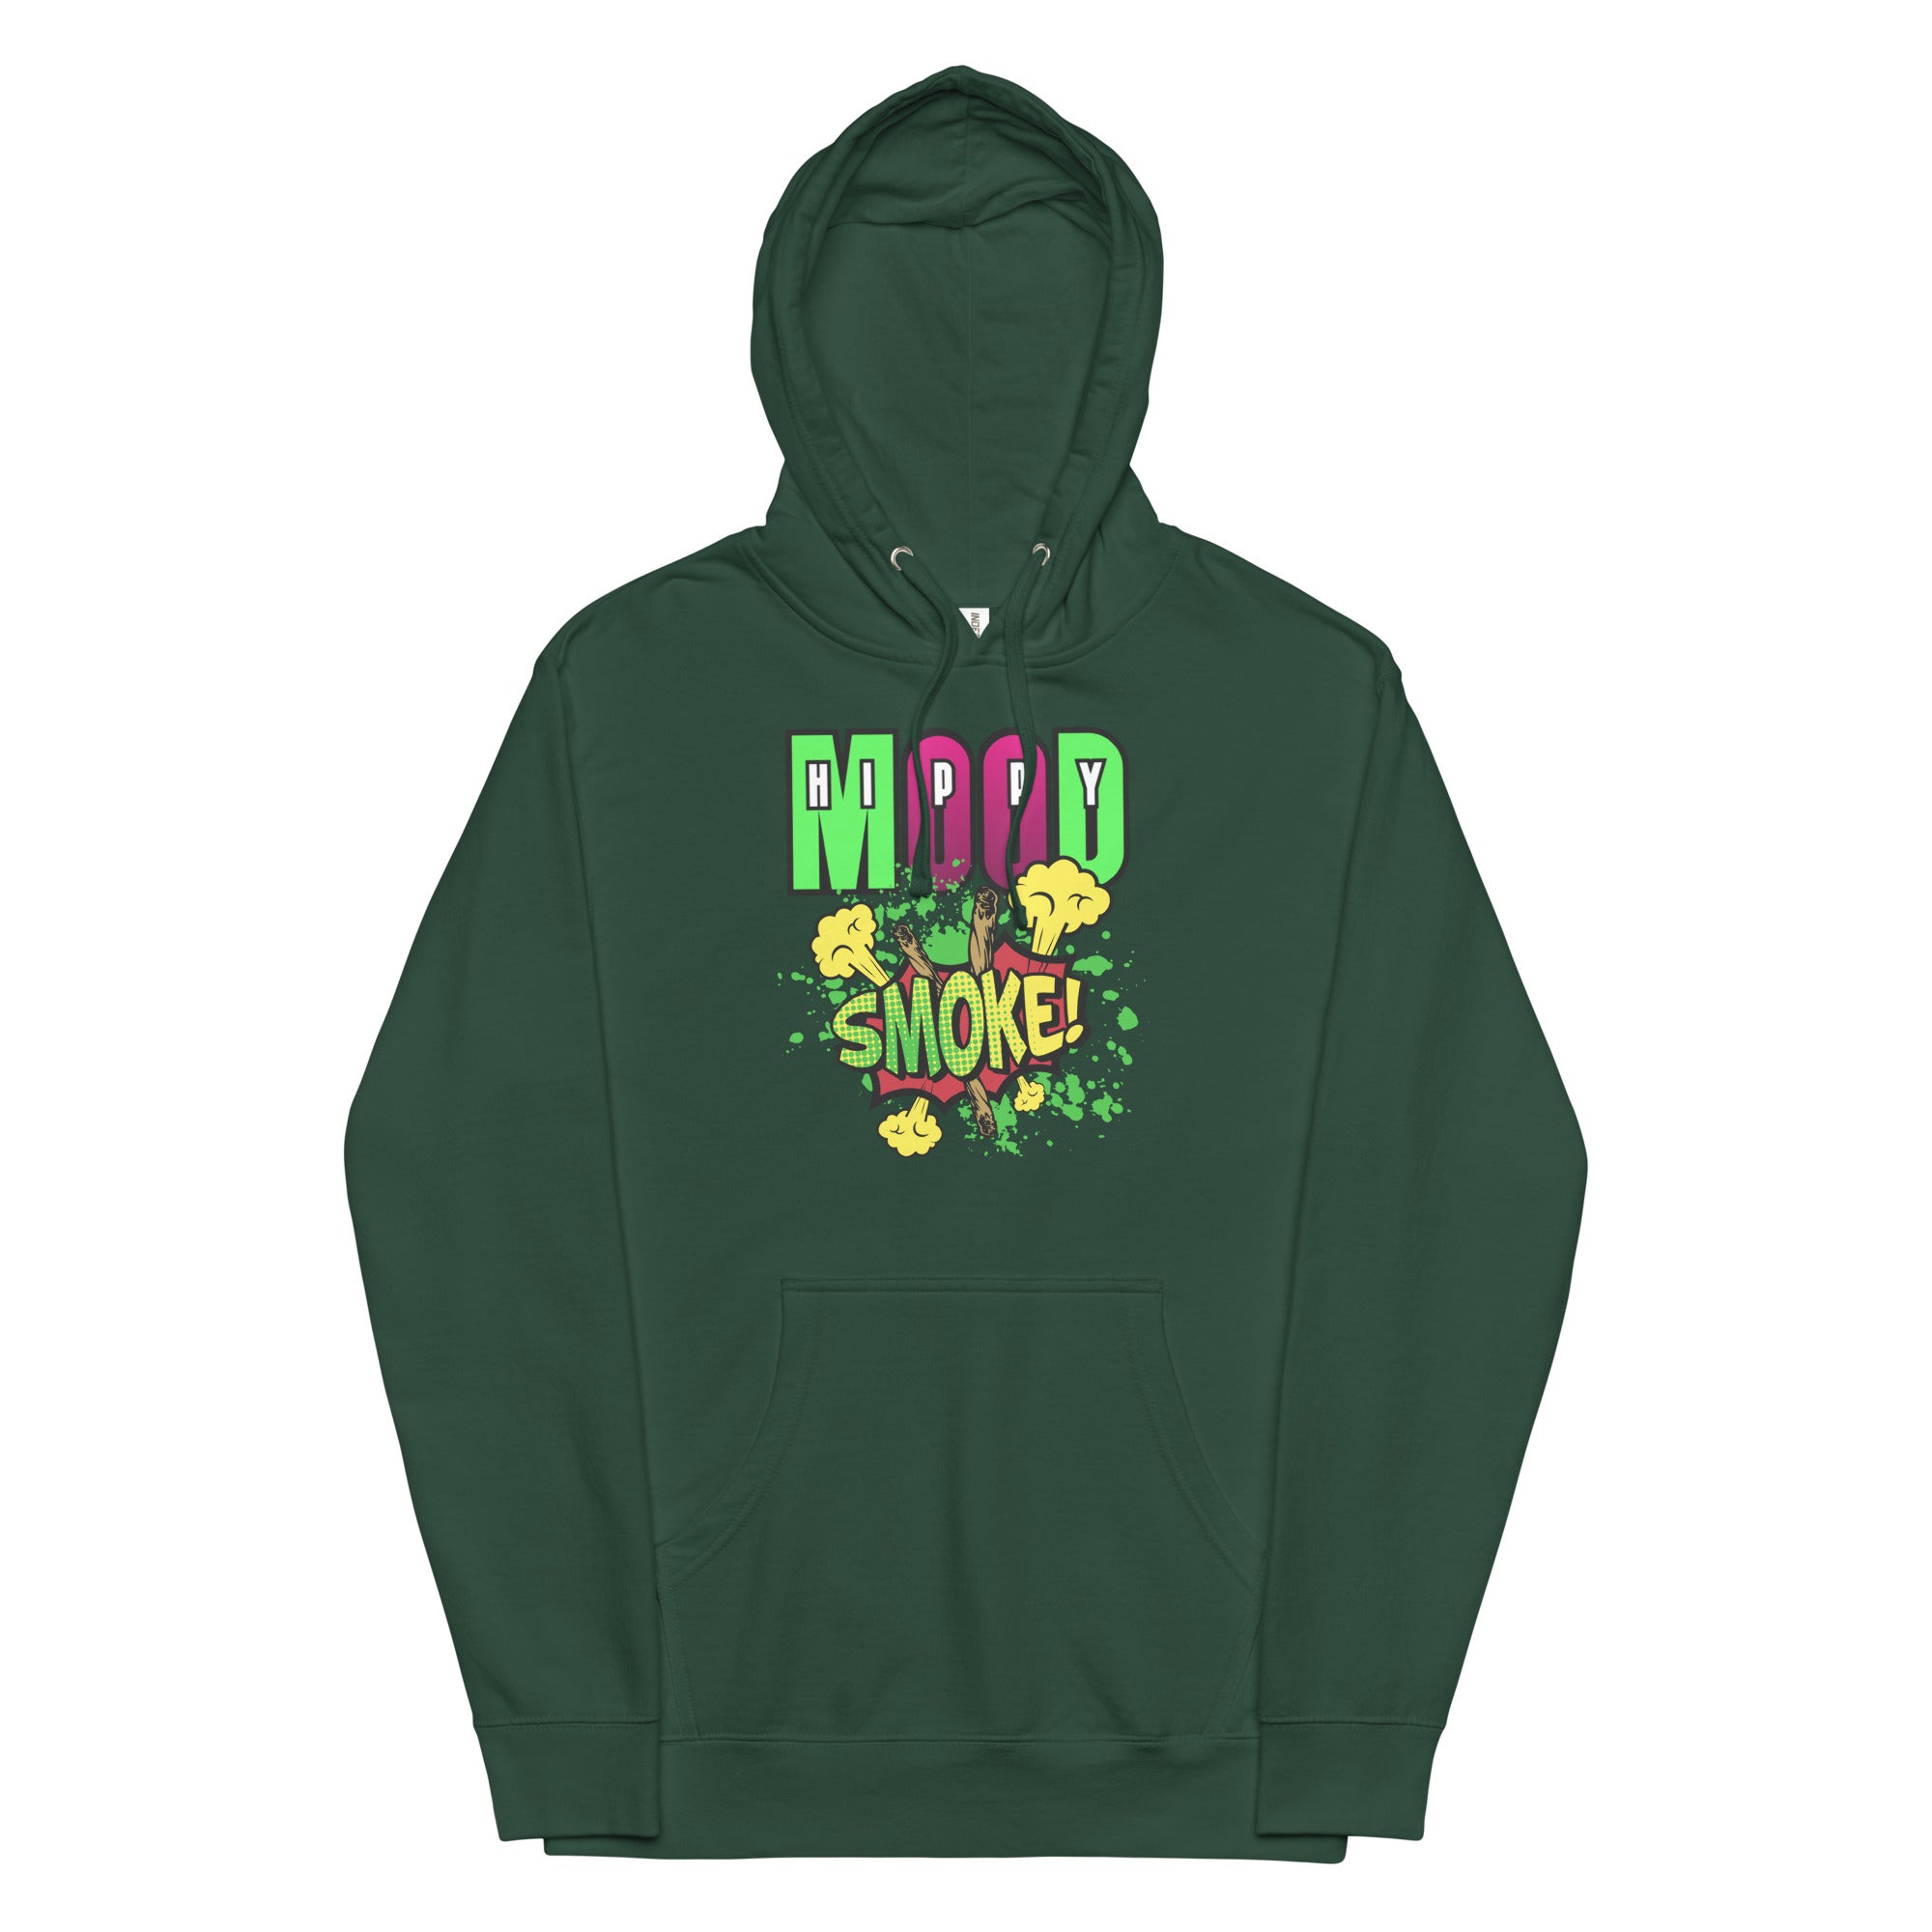 Hippy Mood hoodies